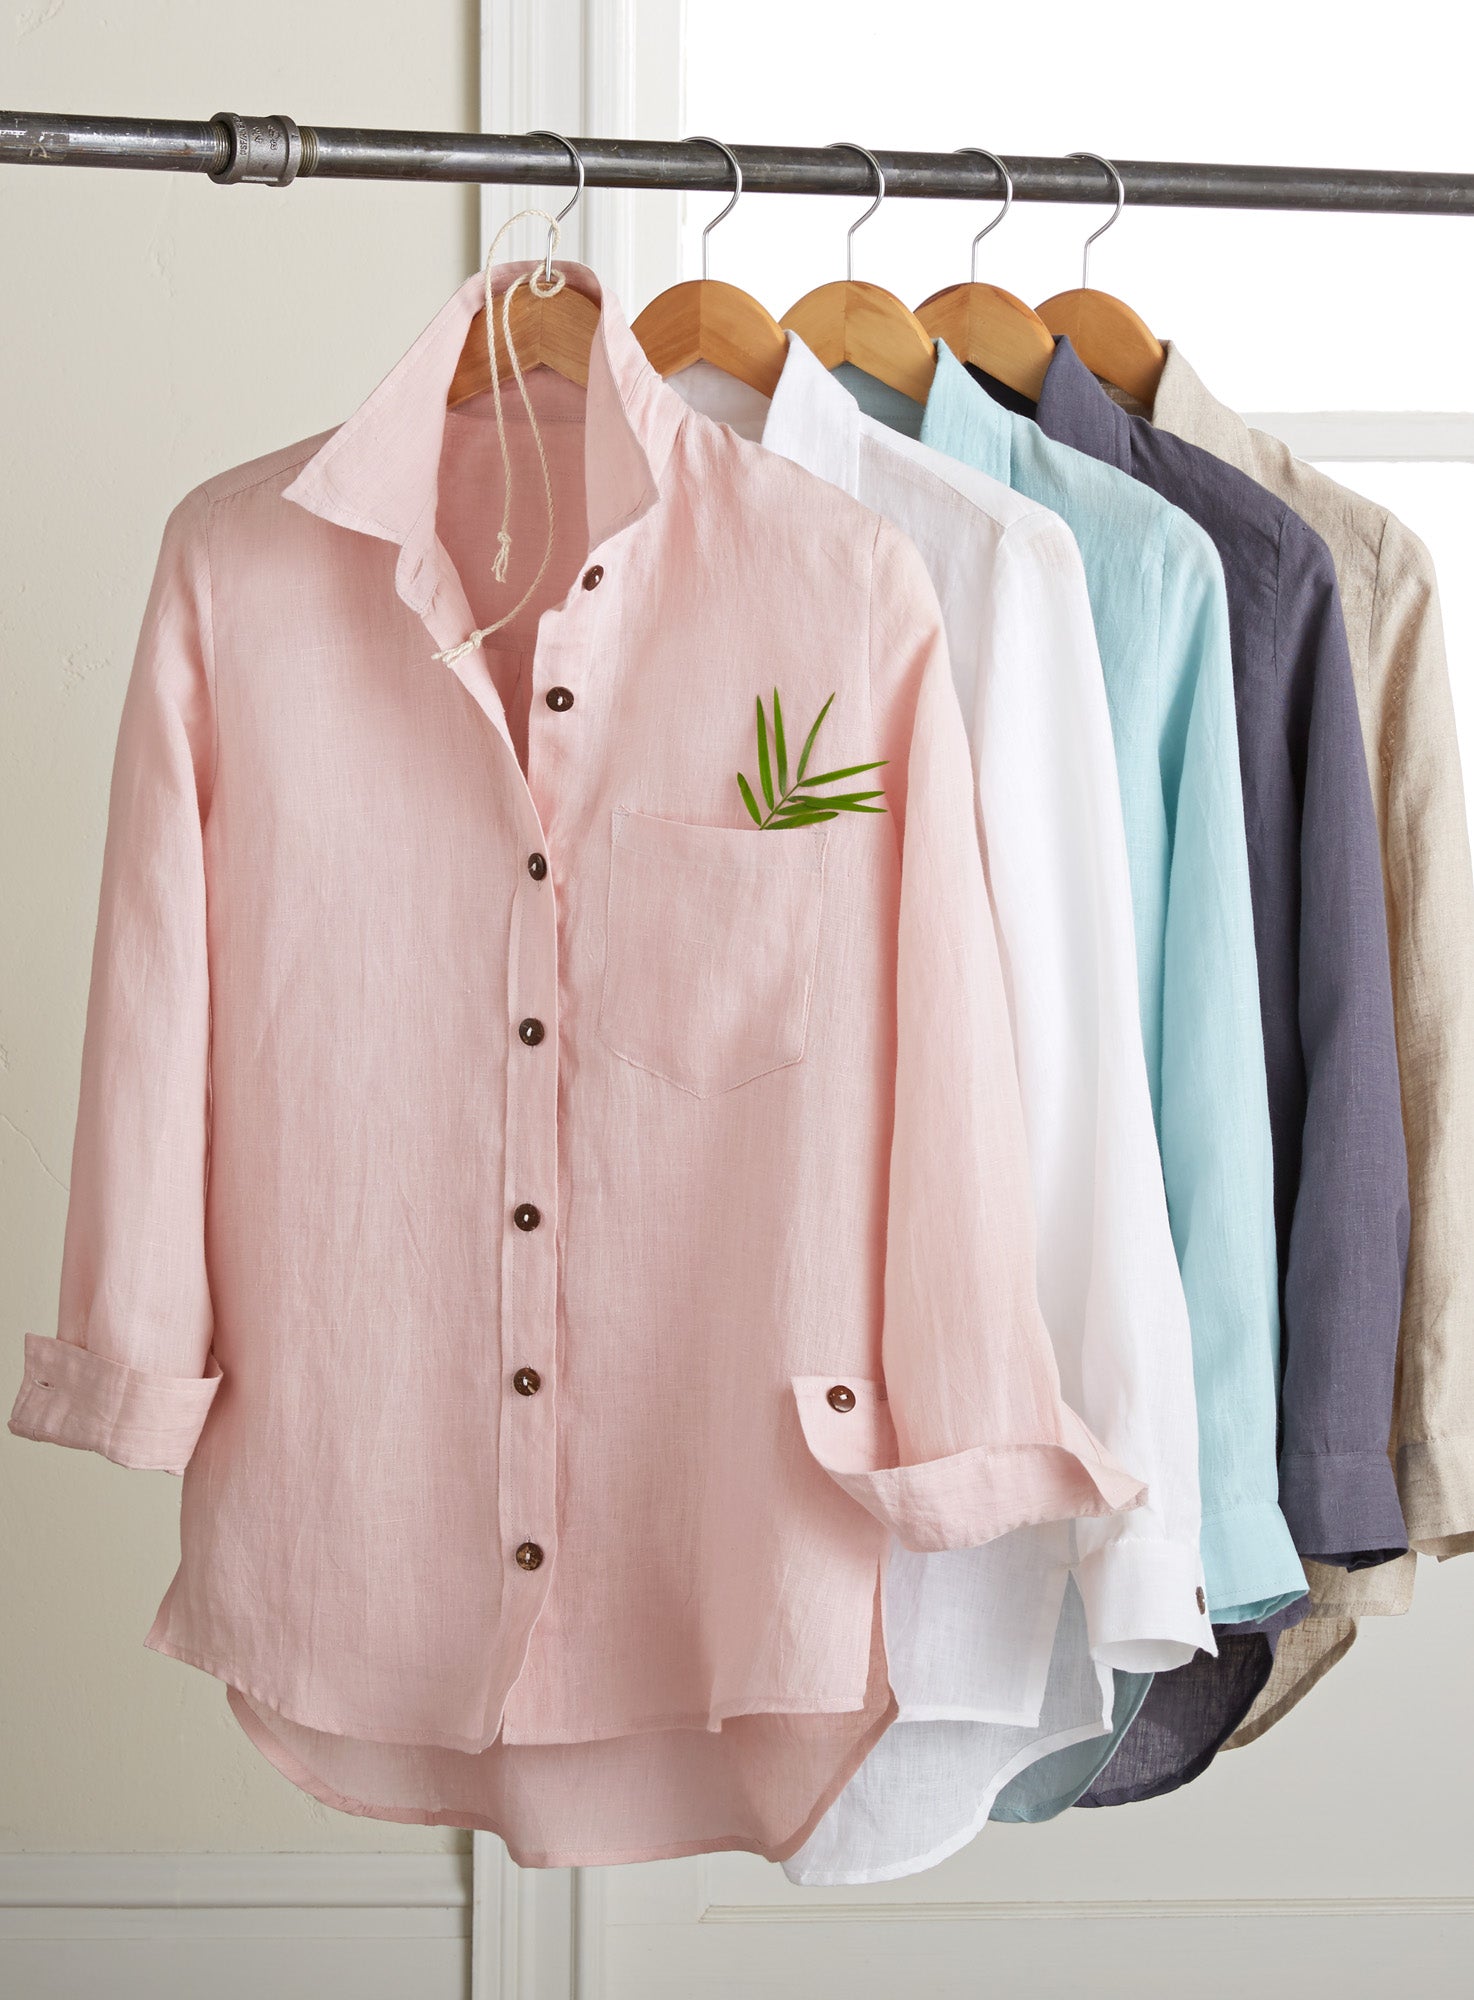 LINEN Shirt LOOSE Tunic , Collar Shirt Oversize Stone Washed , 100% Linen  Shirt , Linen Clothing , Linen Top Plus Size, Oversized Shirt 